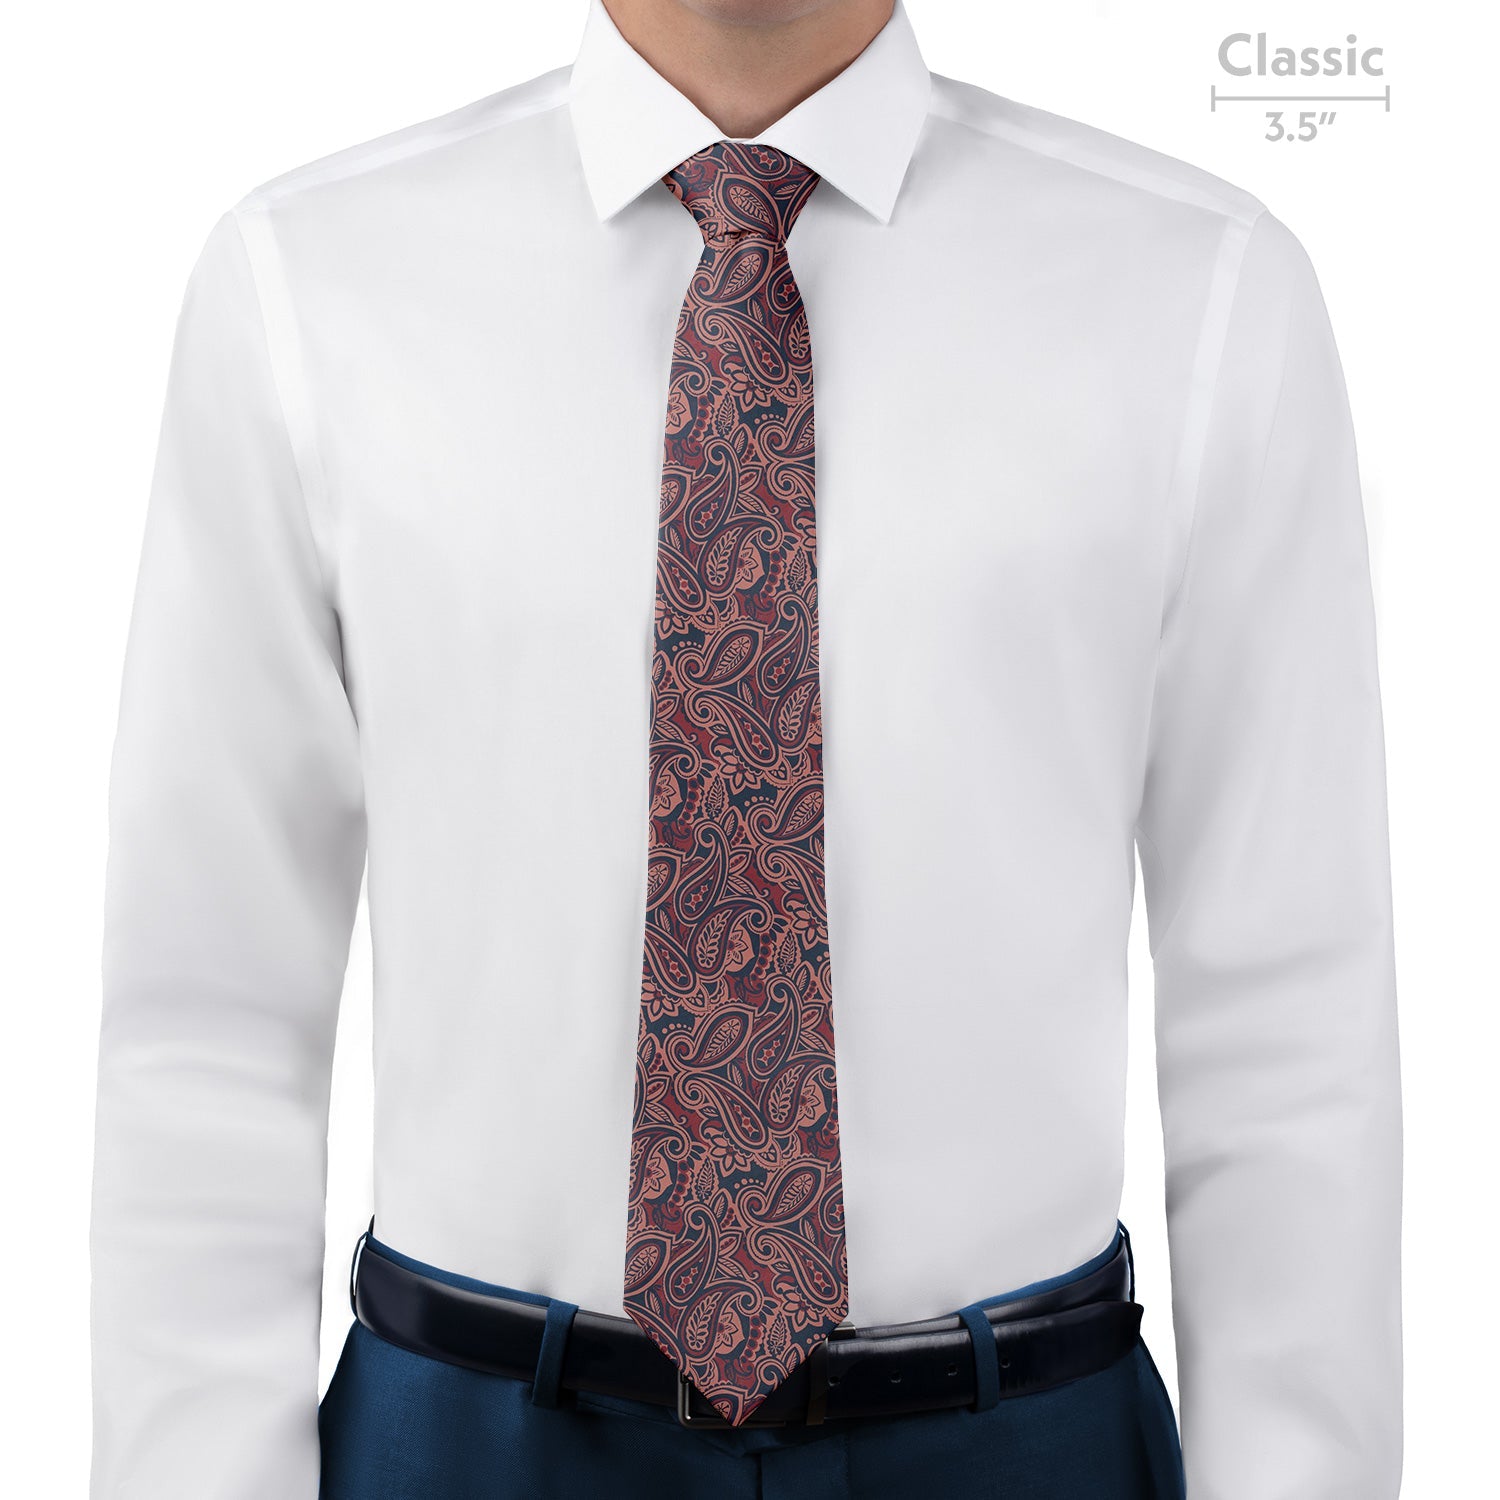 Rustica Paisley Necktie - Classic - Knotty Tie Co.